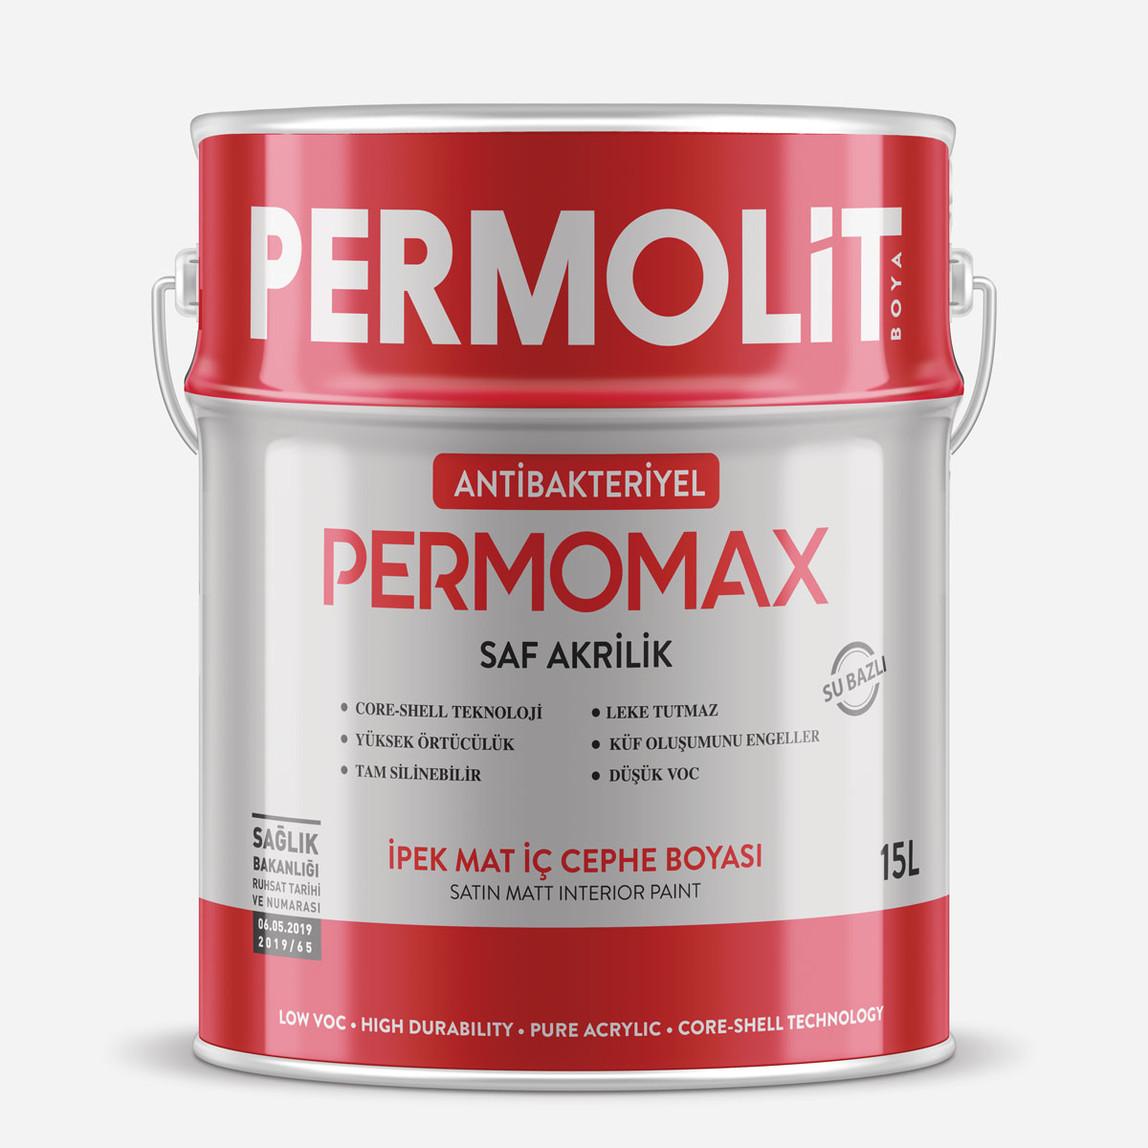    Permolit 15 Litre Permomax Anti Bakteriyel Boya 